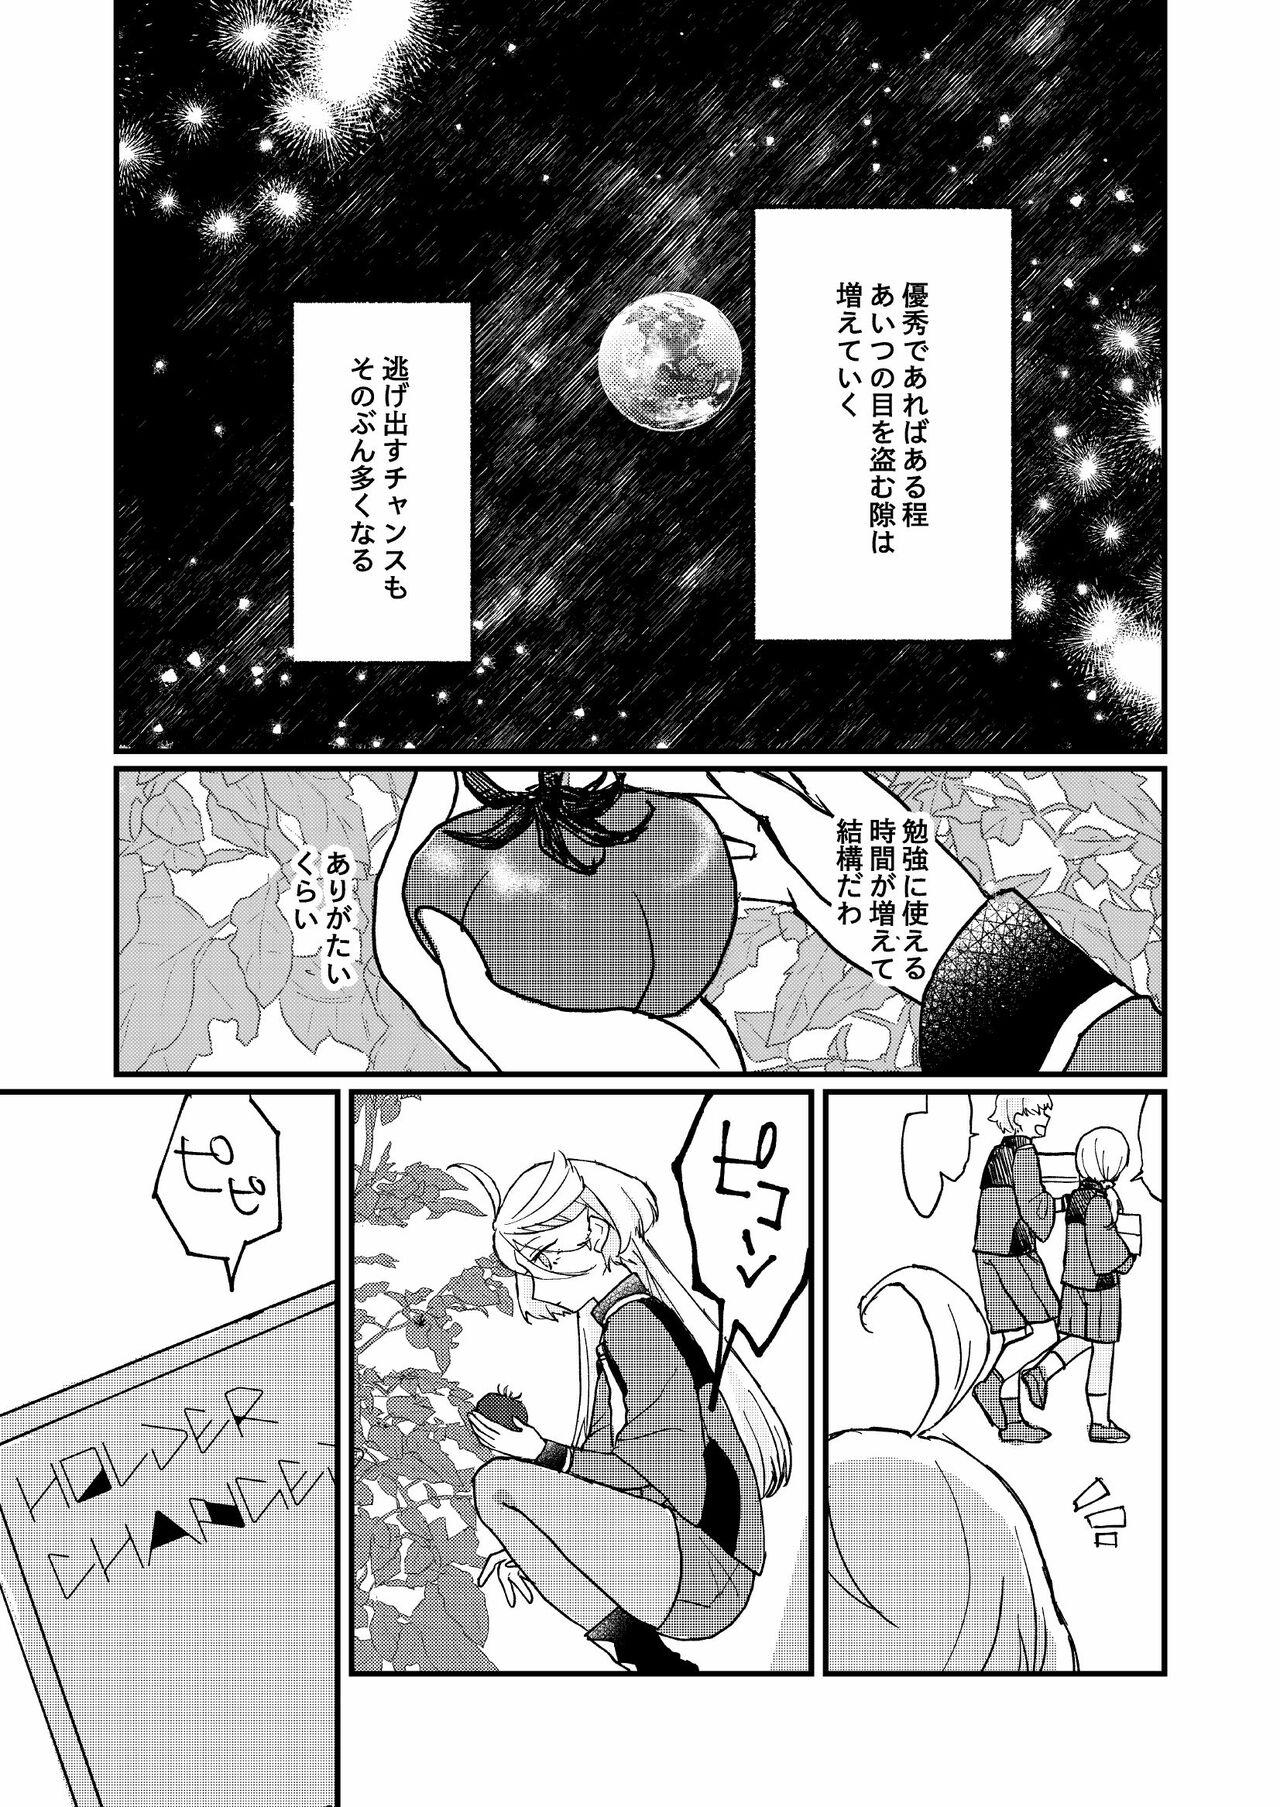 Bound Mizu no Hoshi yori Ai o Komete - Mobile suit gundam the witch from mercury Matures - Page 5